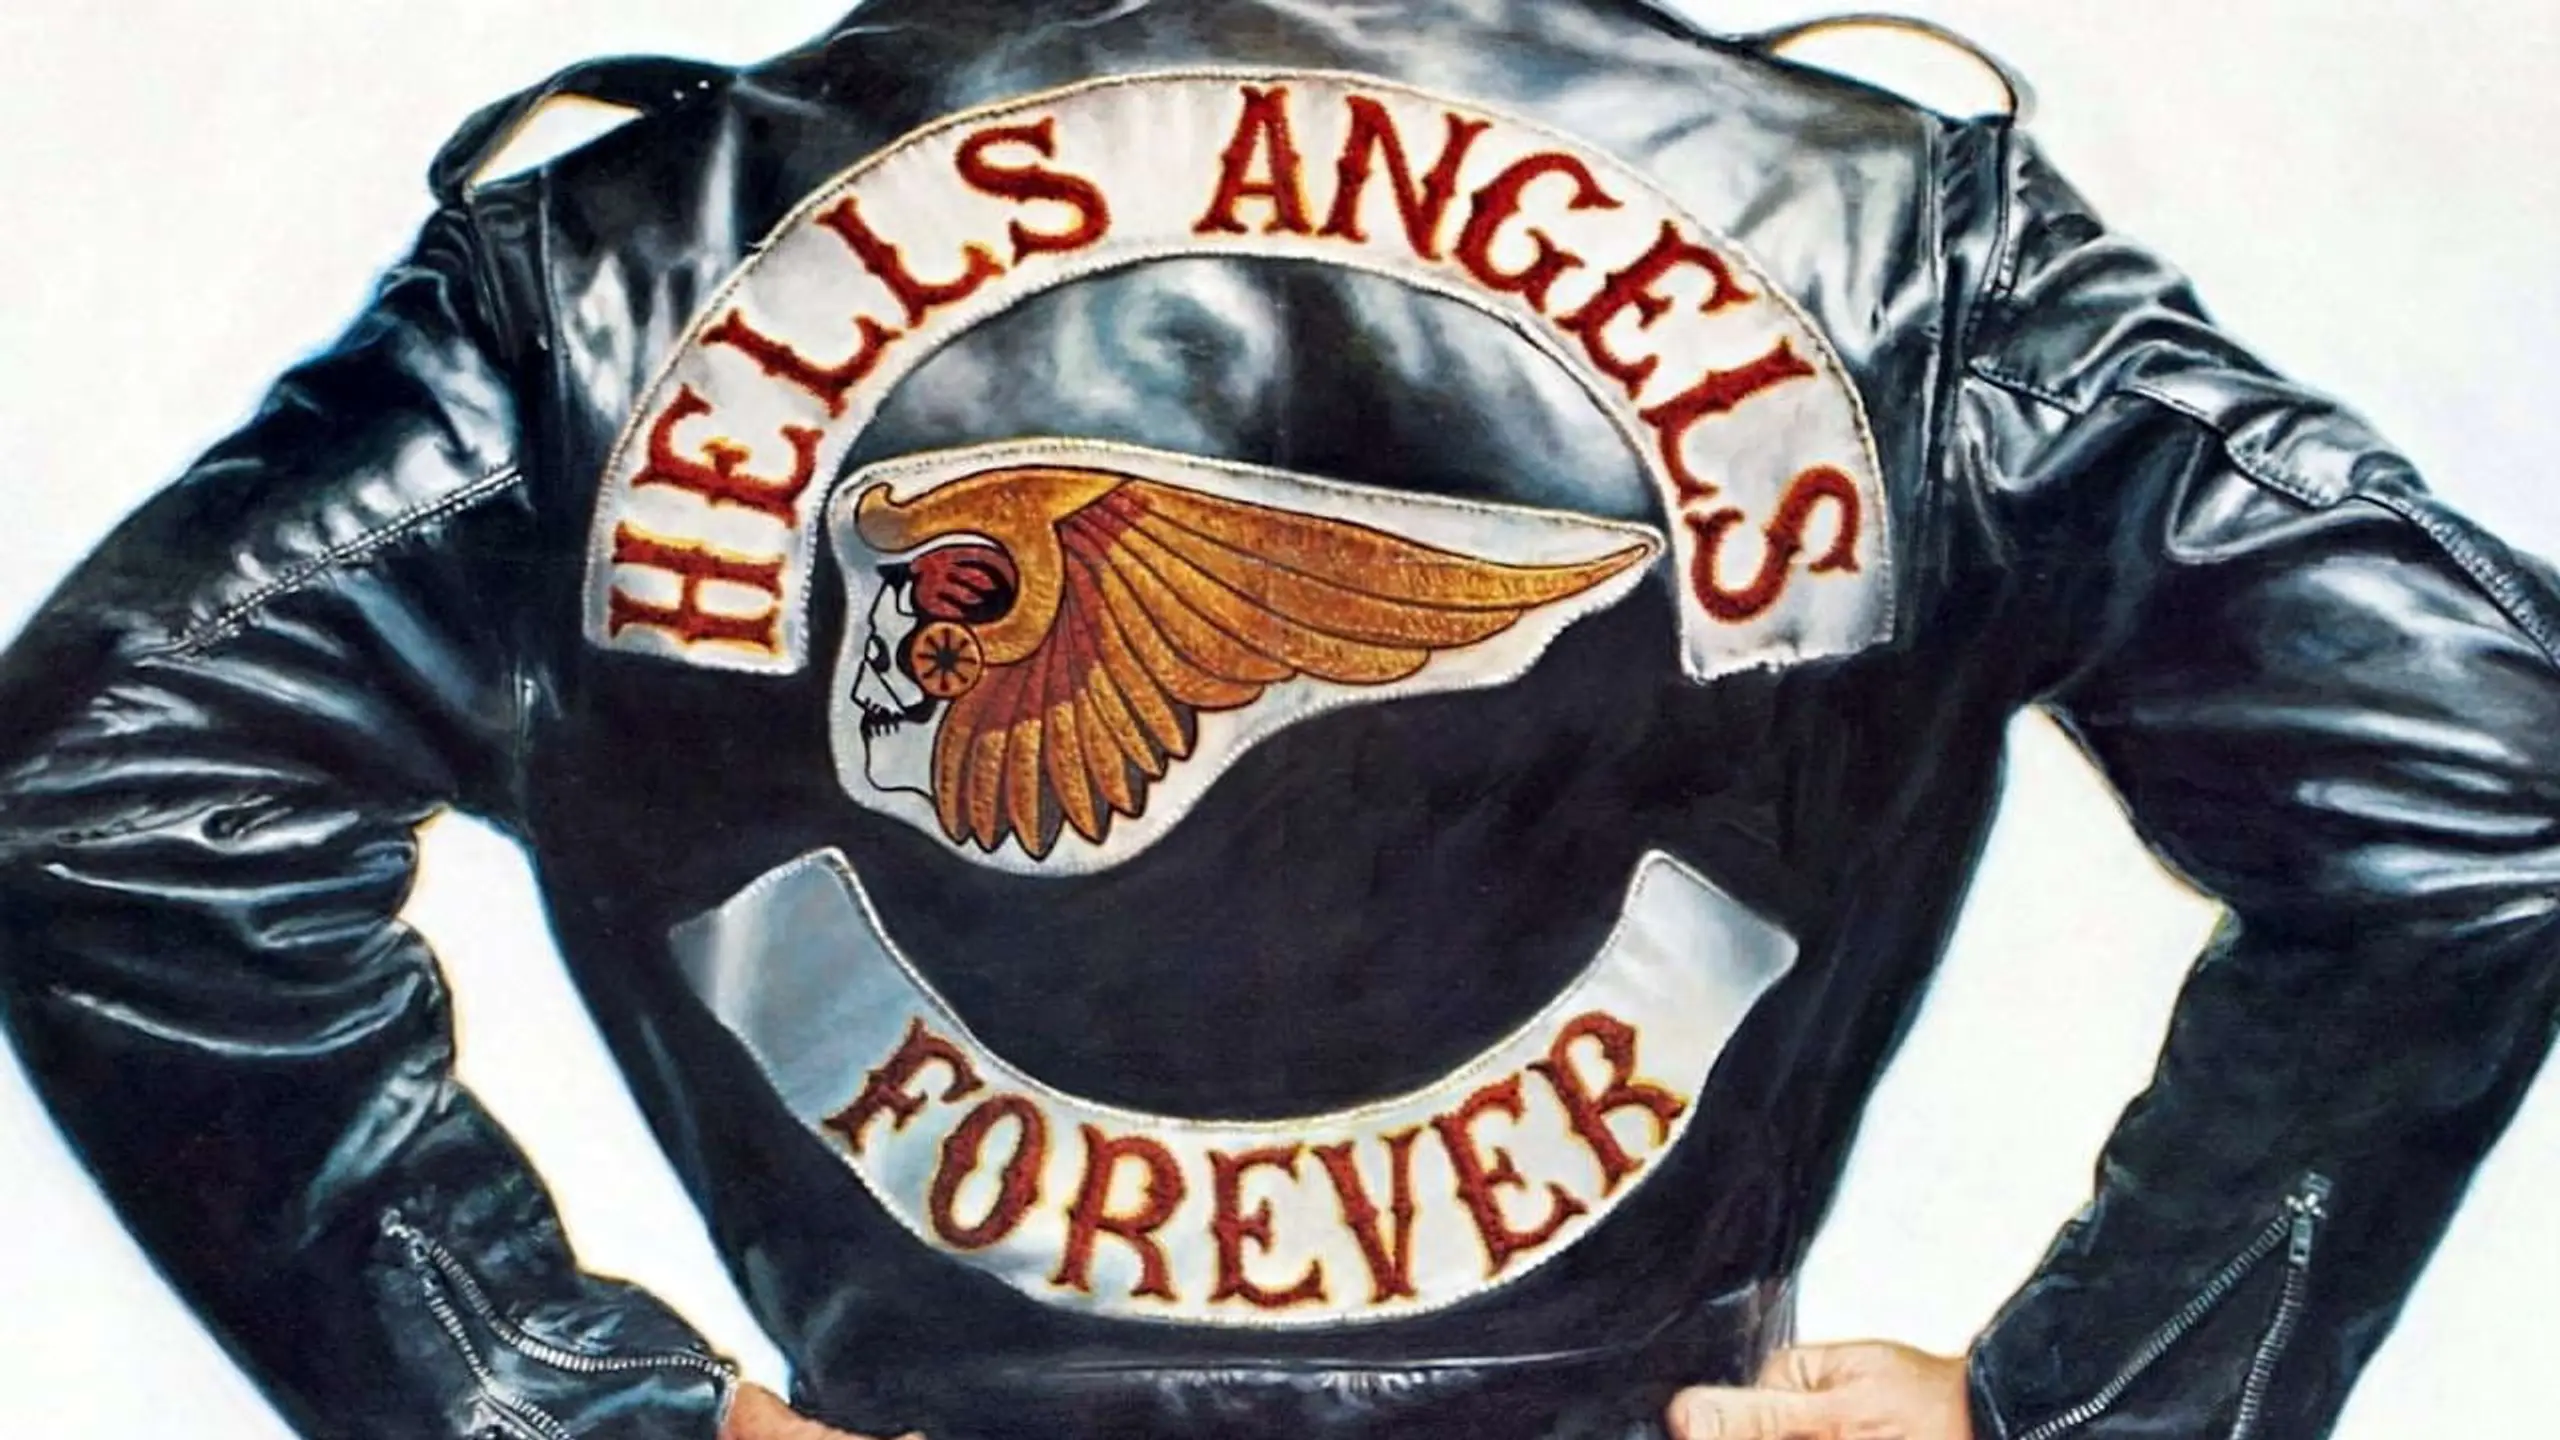 Hells Angels Forever - Engel bis zum Tode